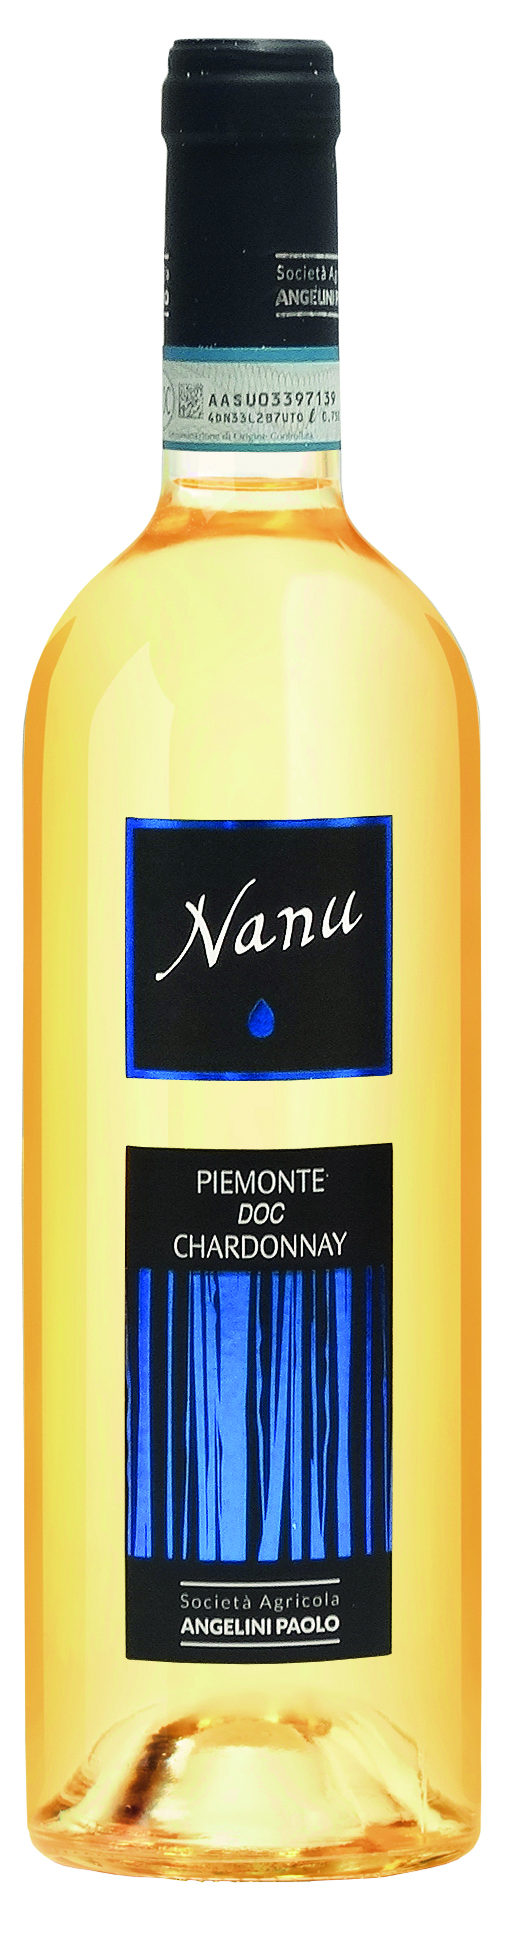 NANU - Piemonte DOC Chardonnay 2021